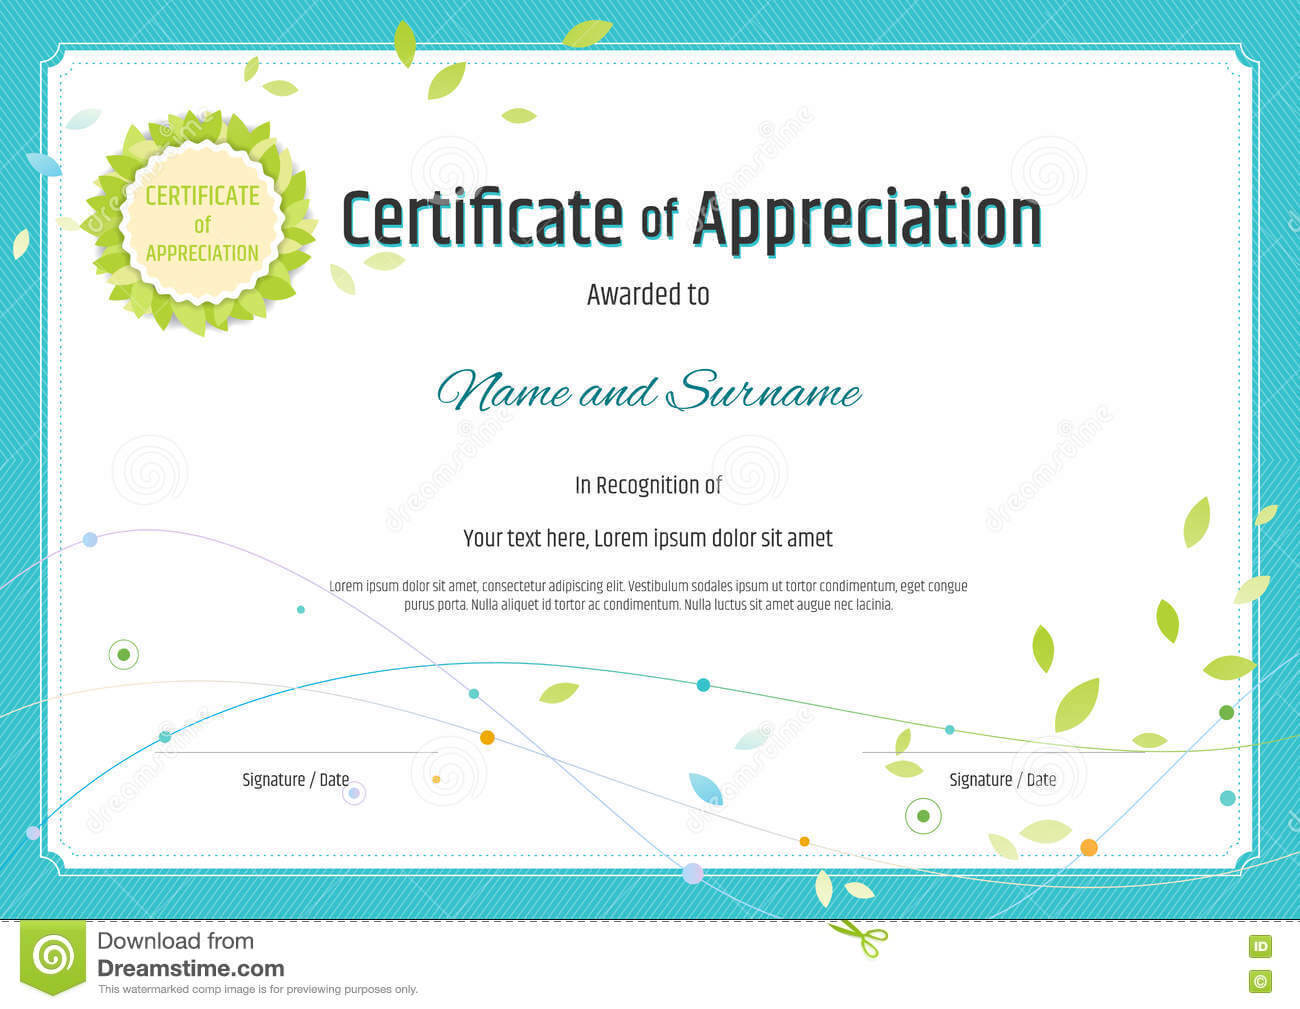 Certificate Of Appreciation Template In Nature Theme With Regarding Free Certificate Of Appreciation Template Downloads